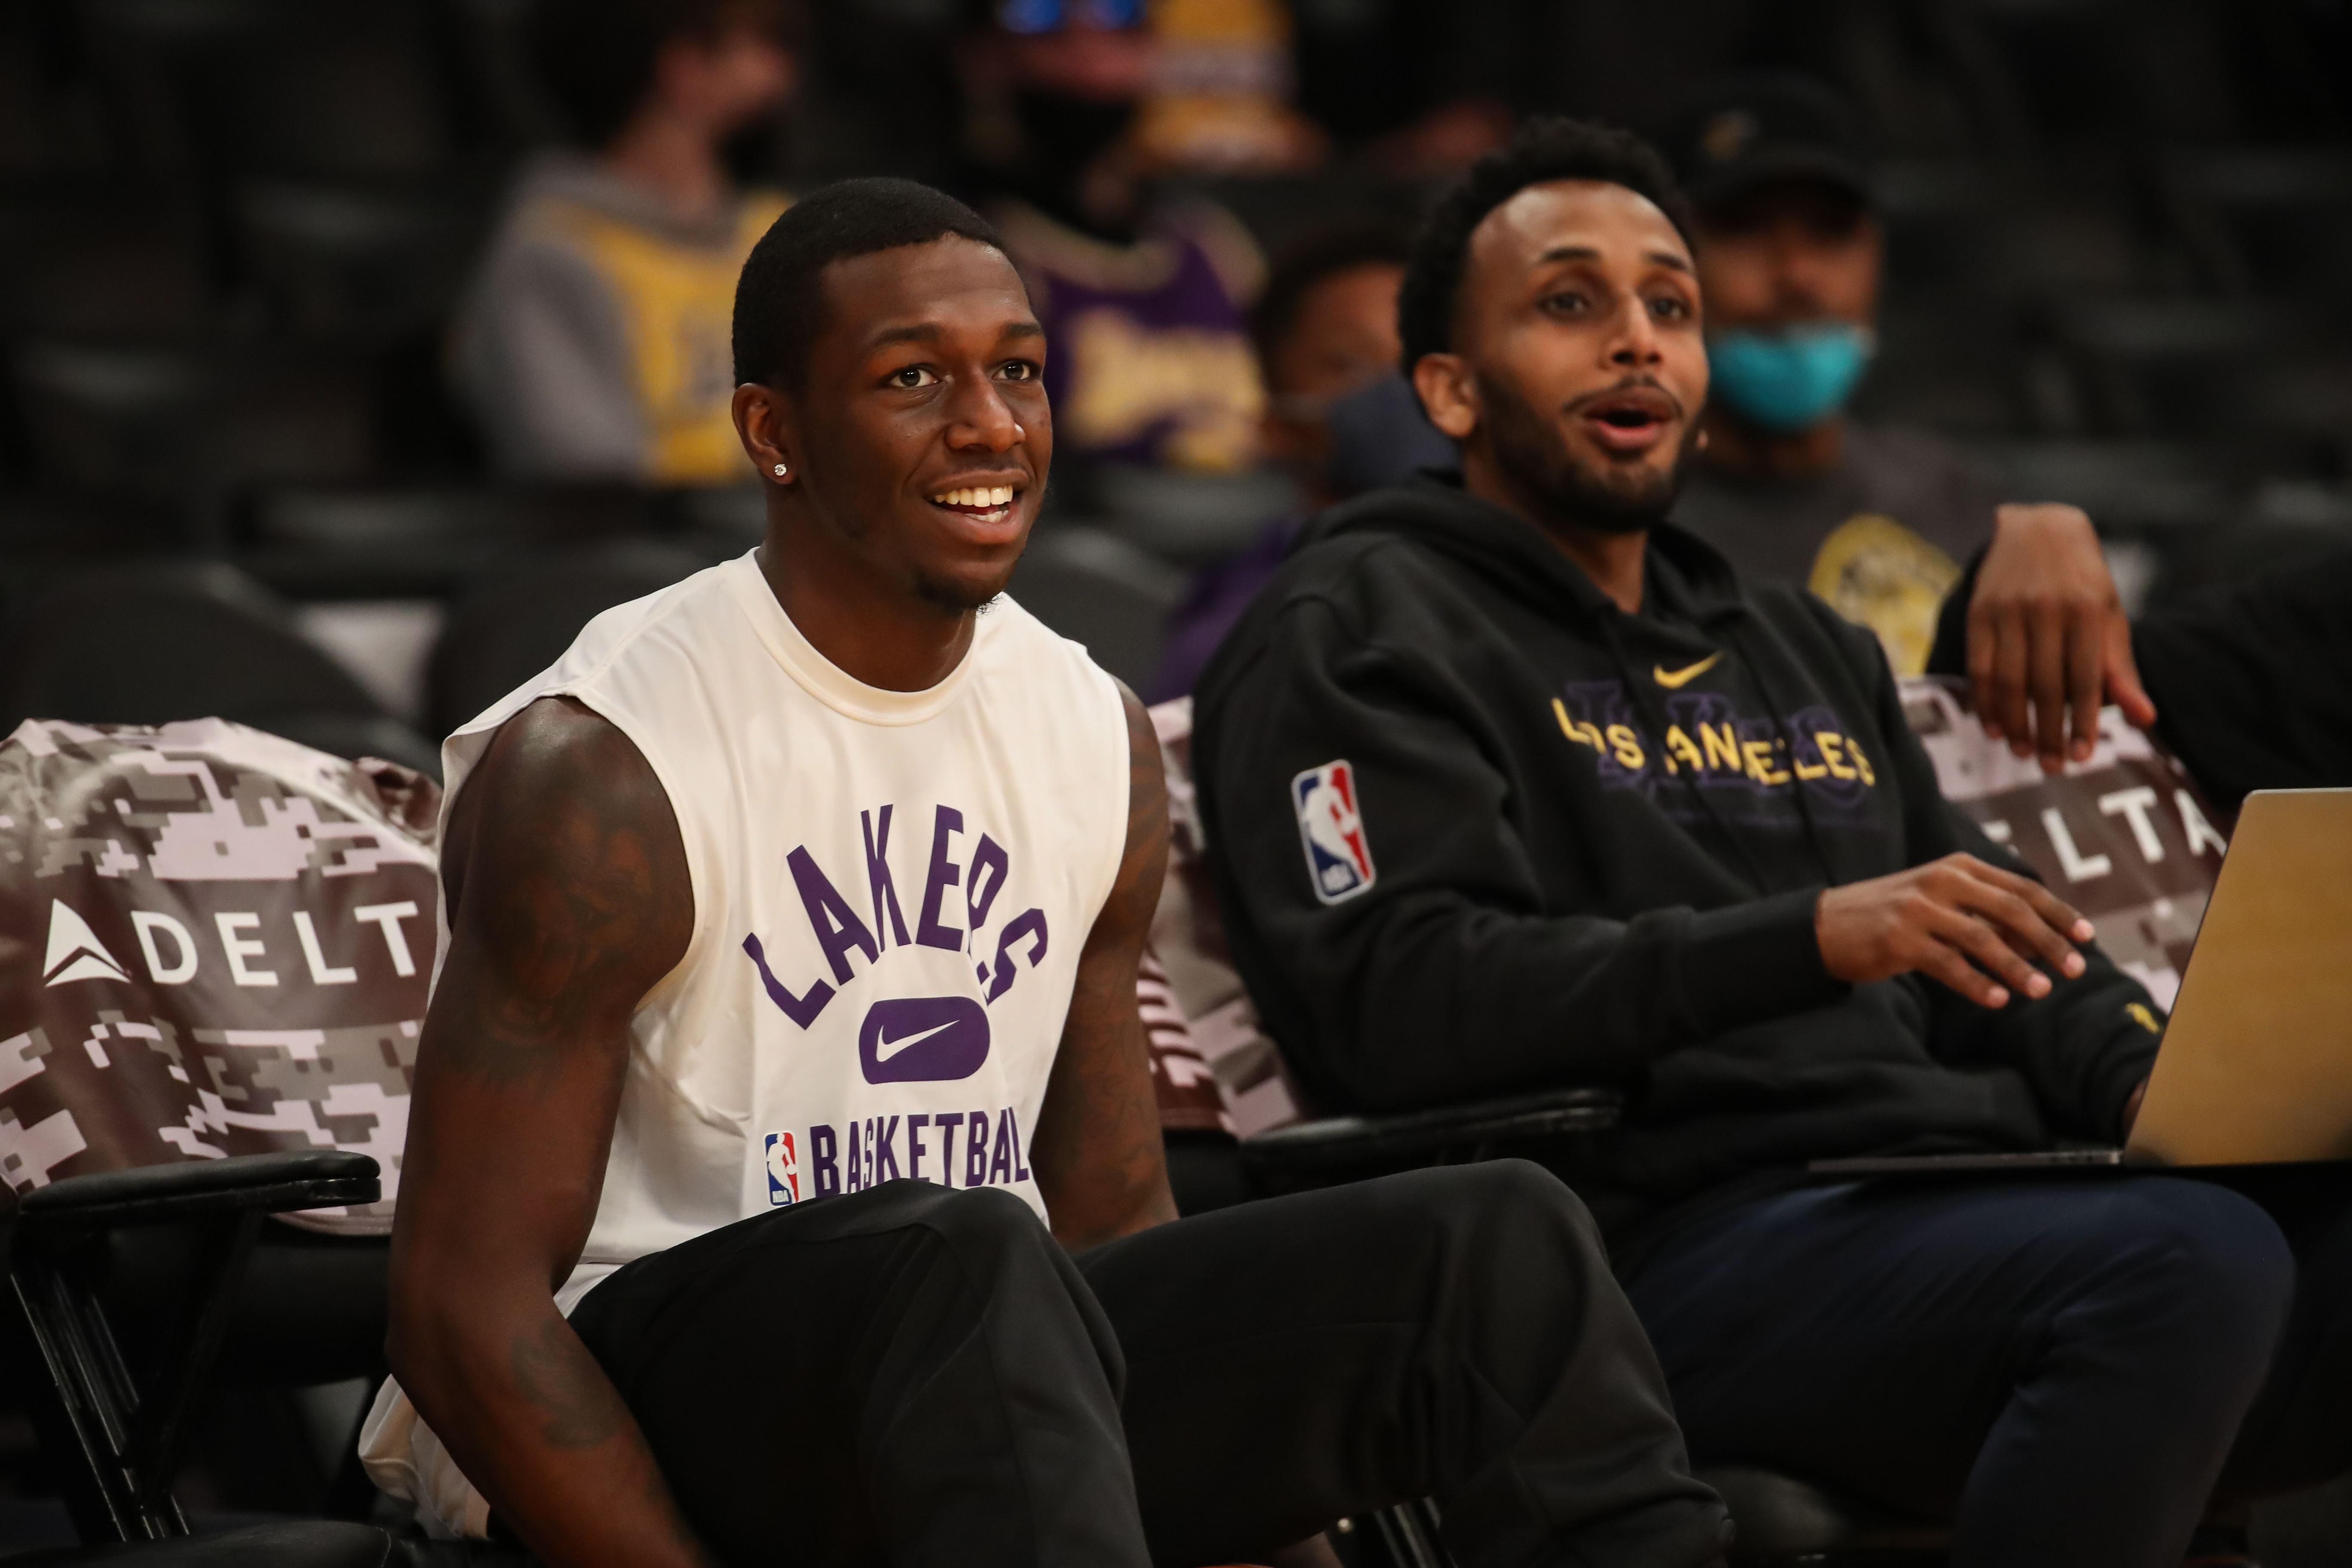 NBA: NOV 14 Spurs at Lakers